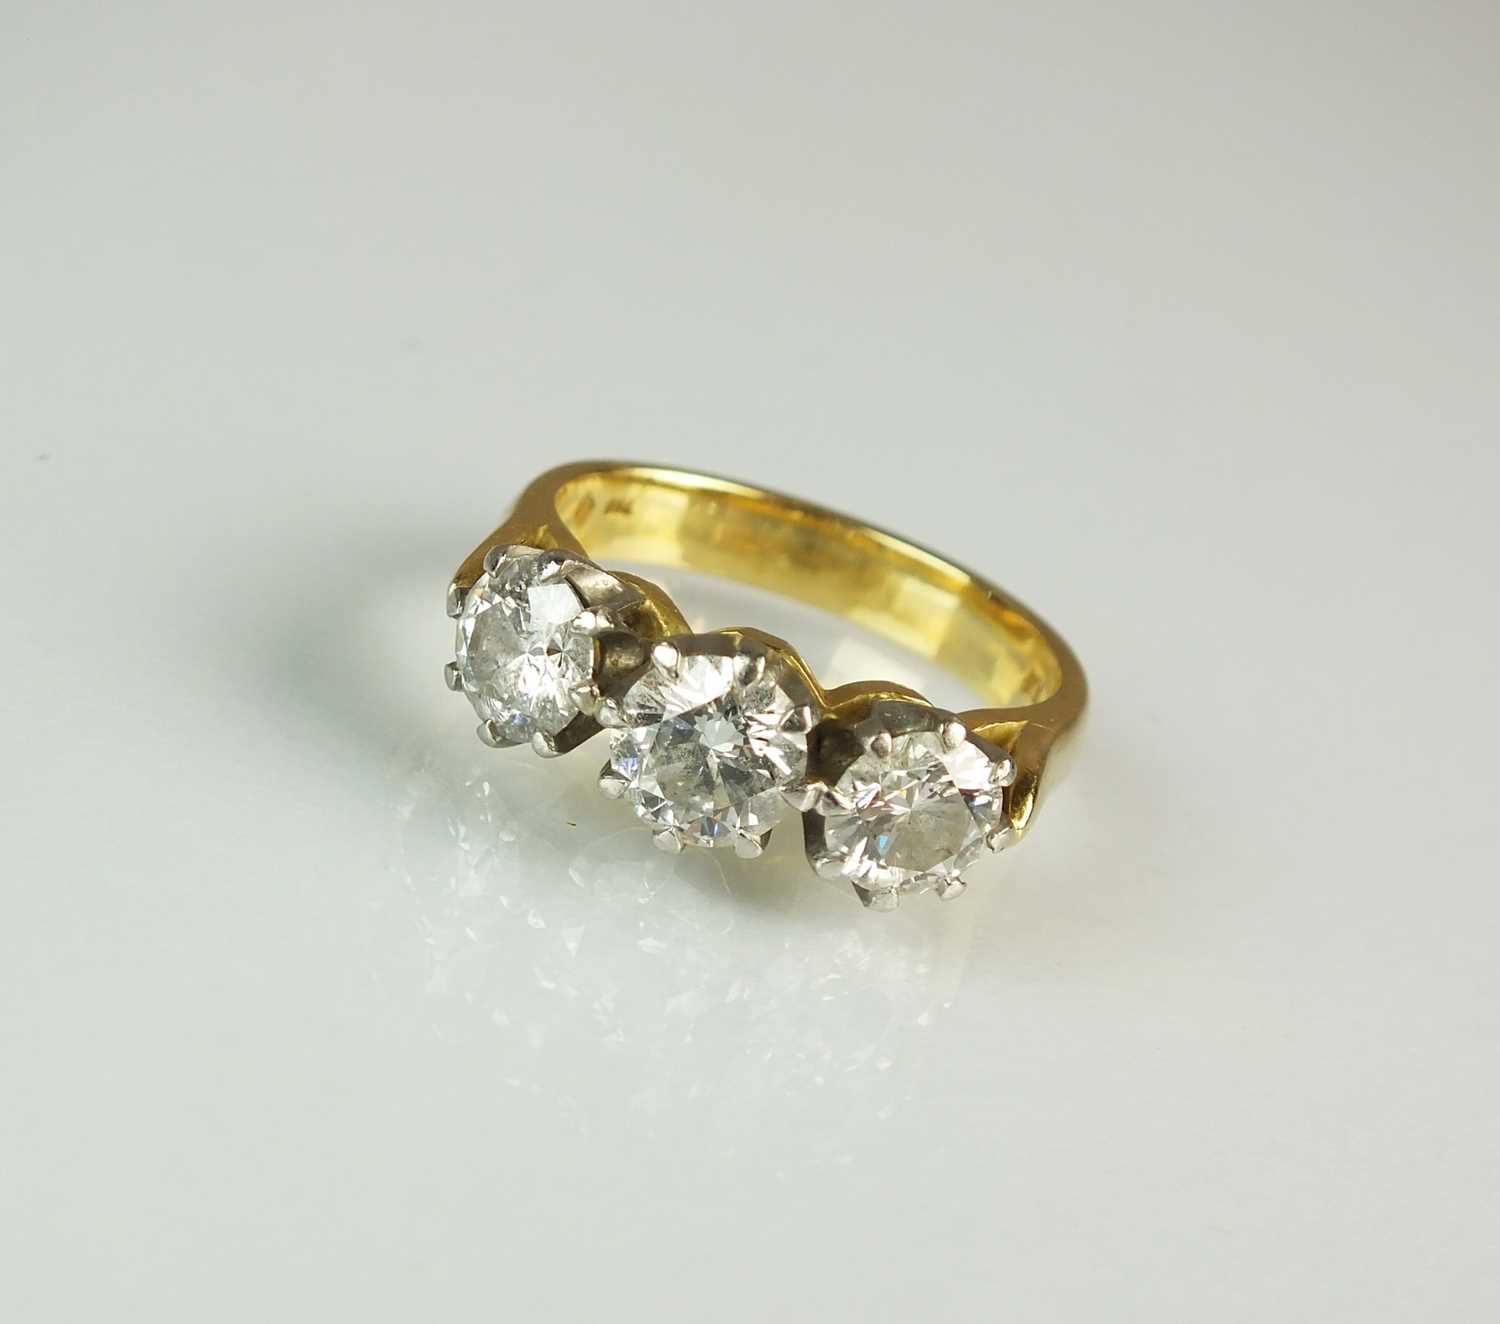 76 - A three stone diamond ring